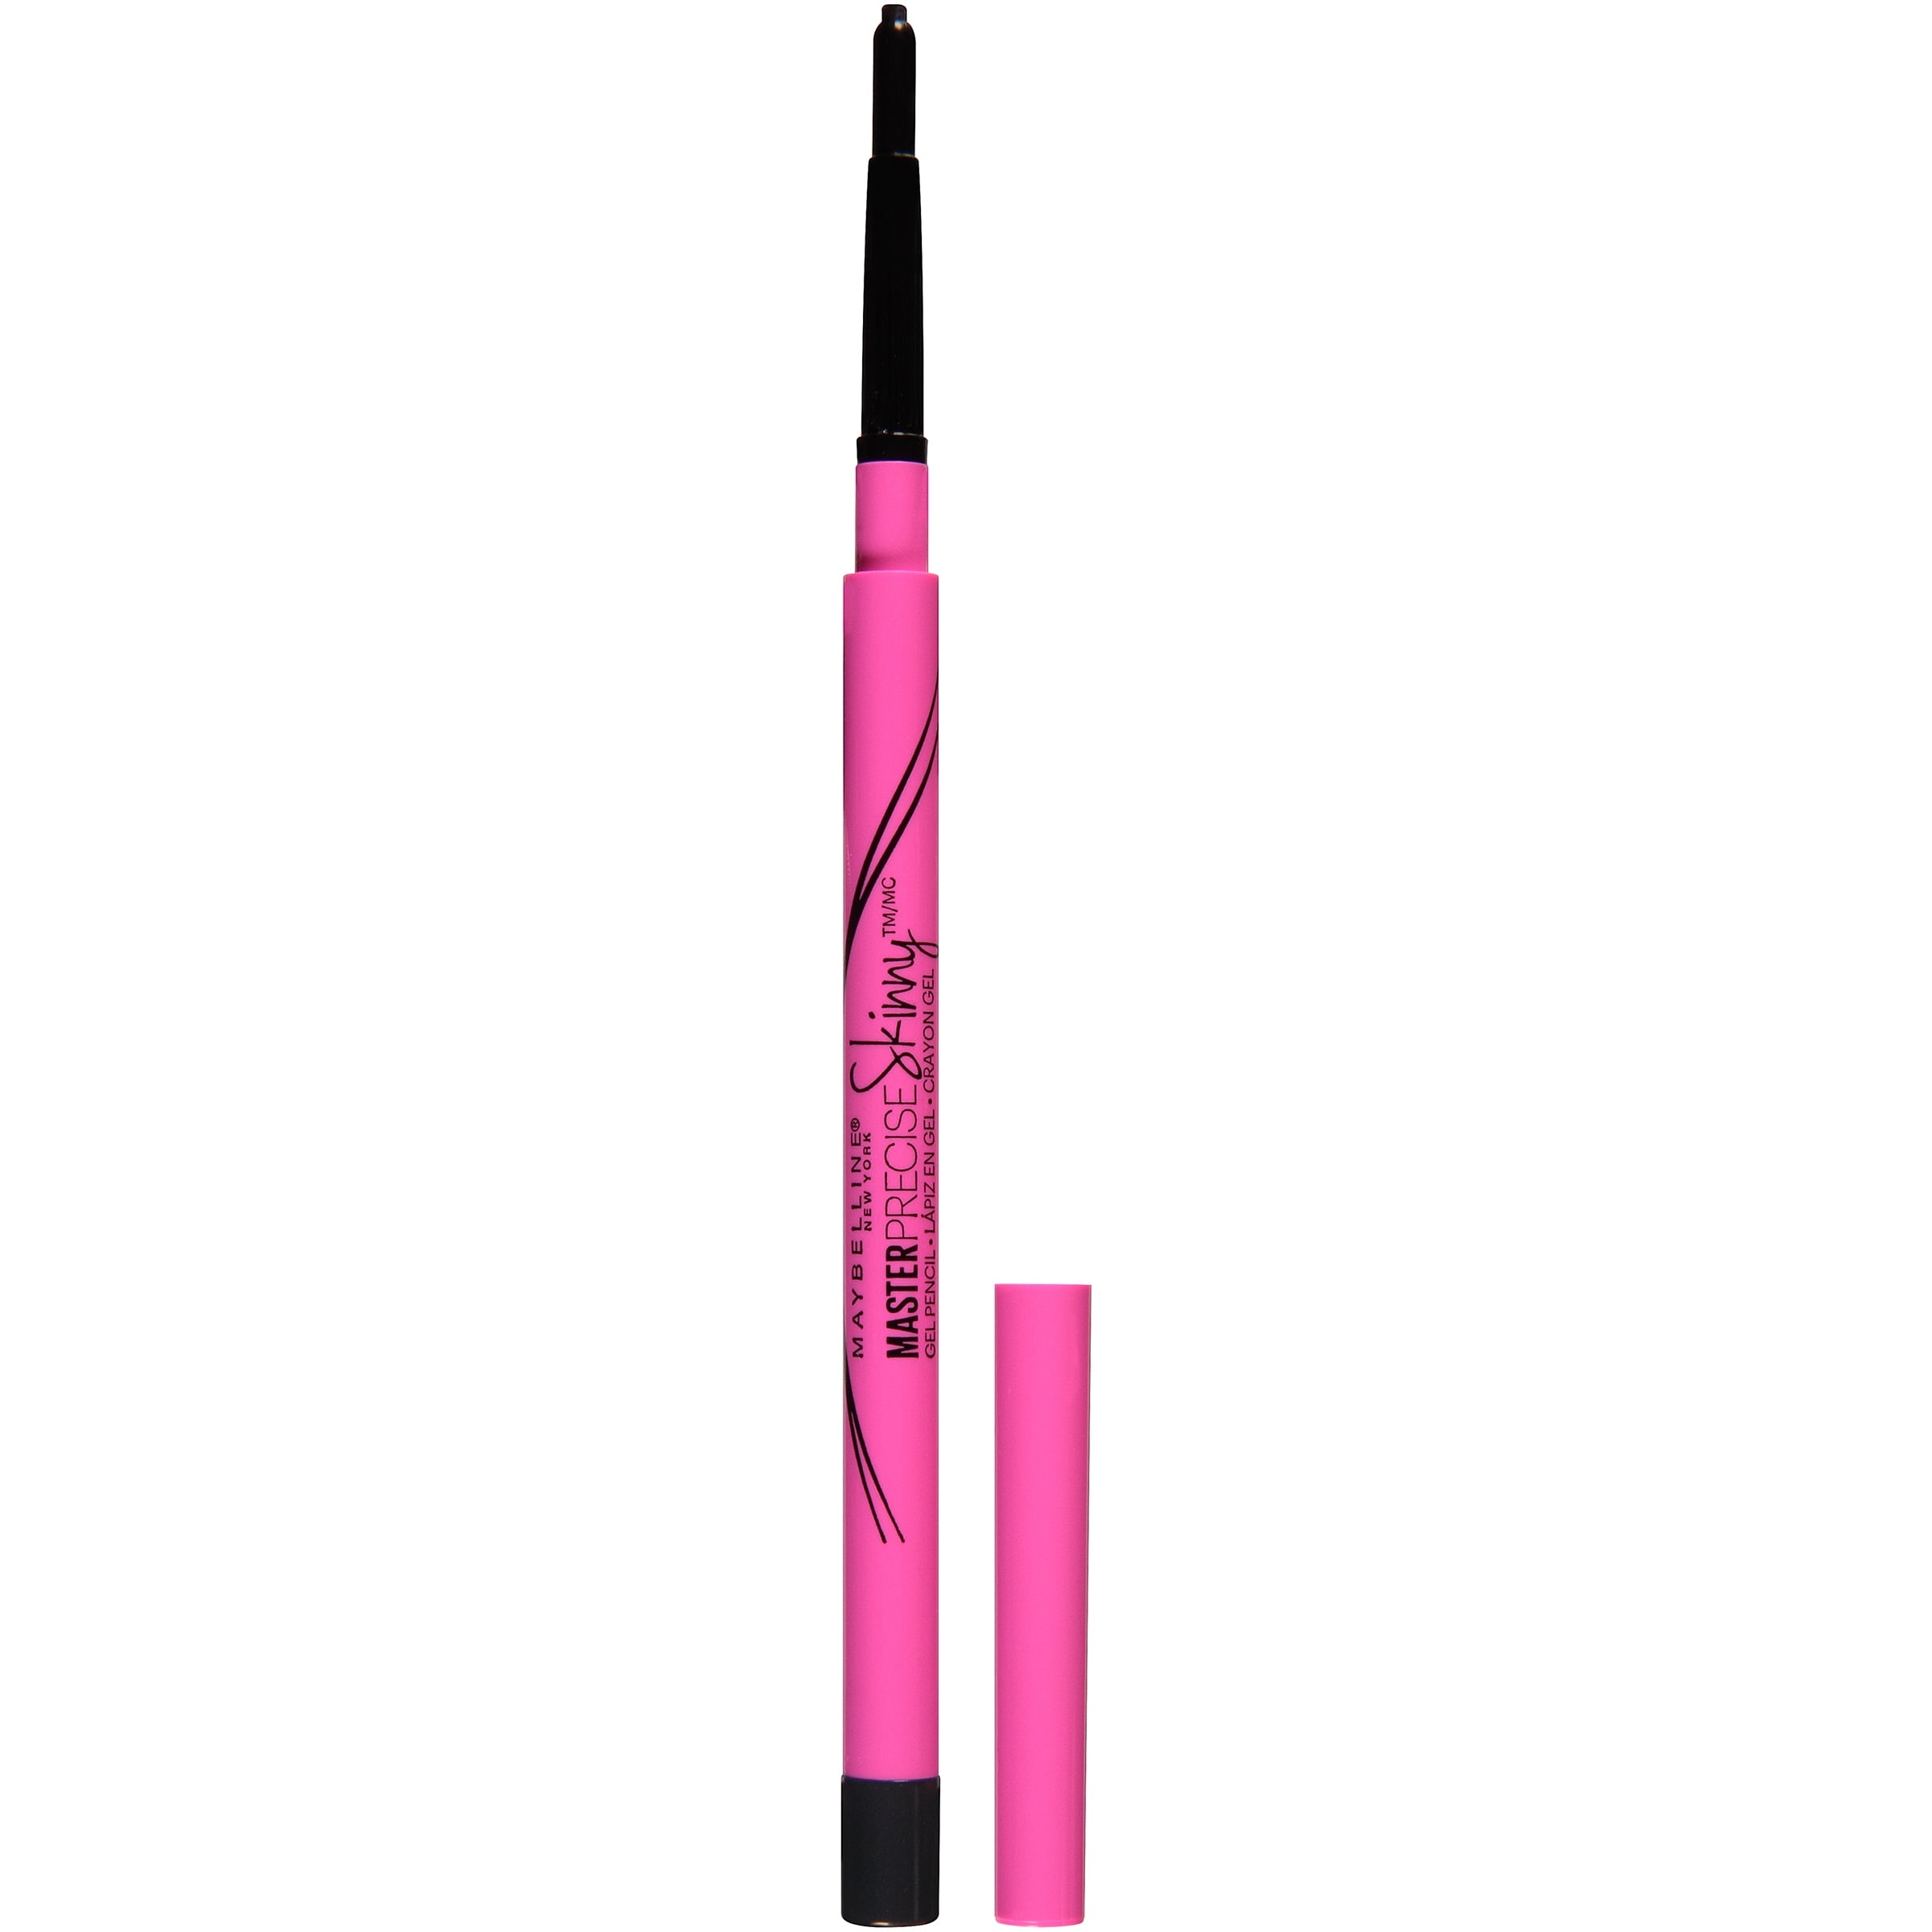 Maybelline Master Precise Skinny Gel Eyeliner Pencil, Defining Black